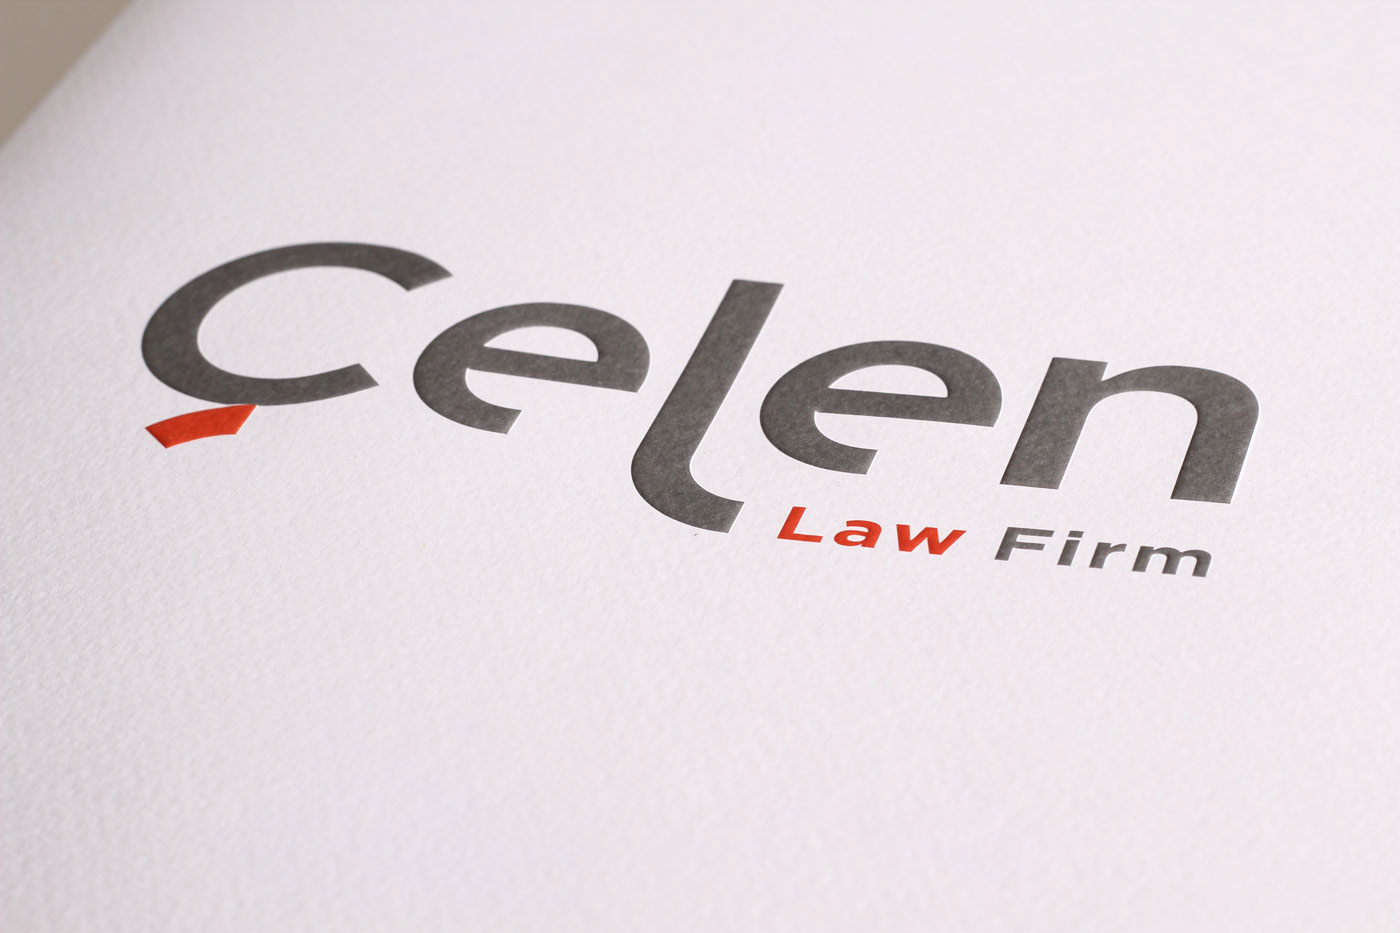 Adobe Portfolio celen law firm Office graphic istanbul